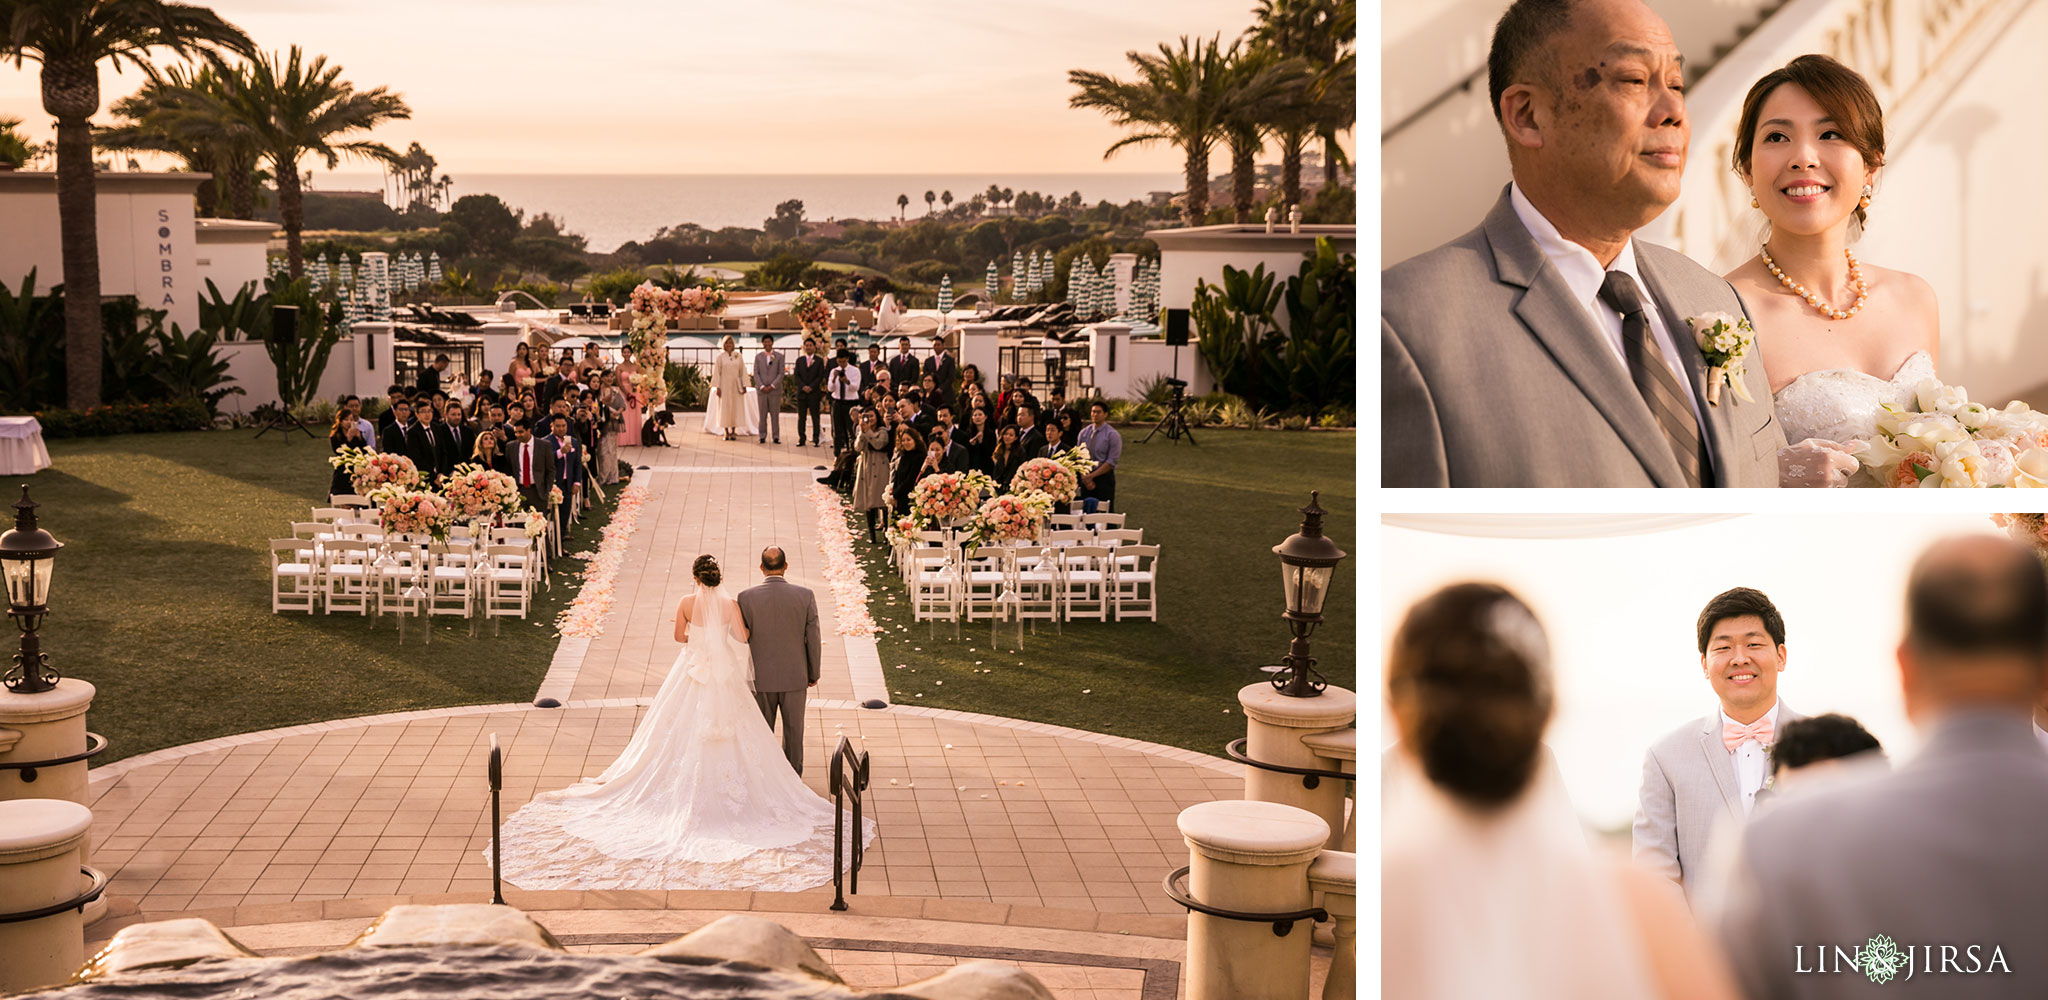 28 monarch beach resort wedding ceremony photography